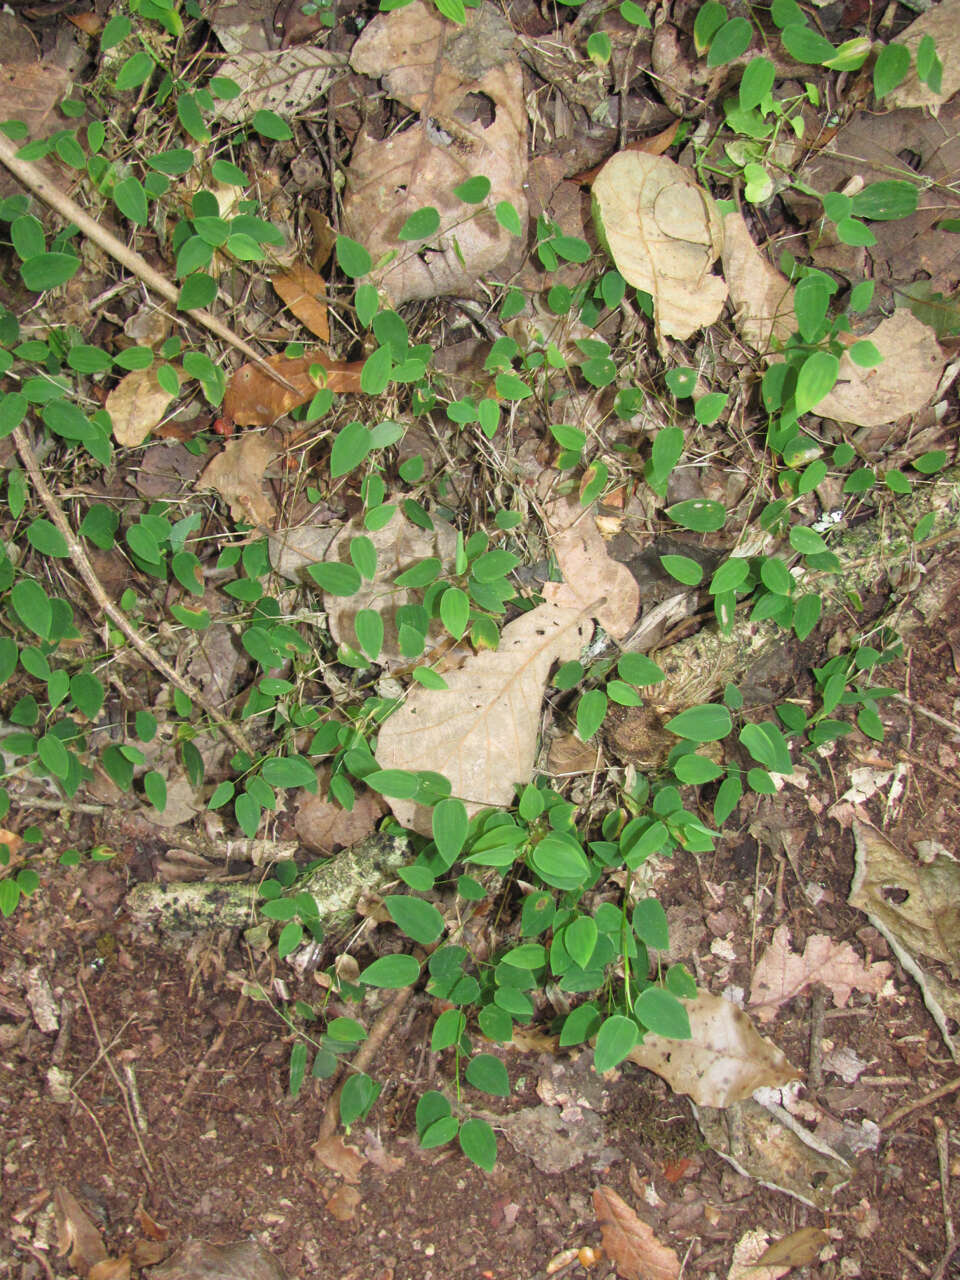 Image of Zeugites americanus Willd.